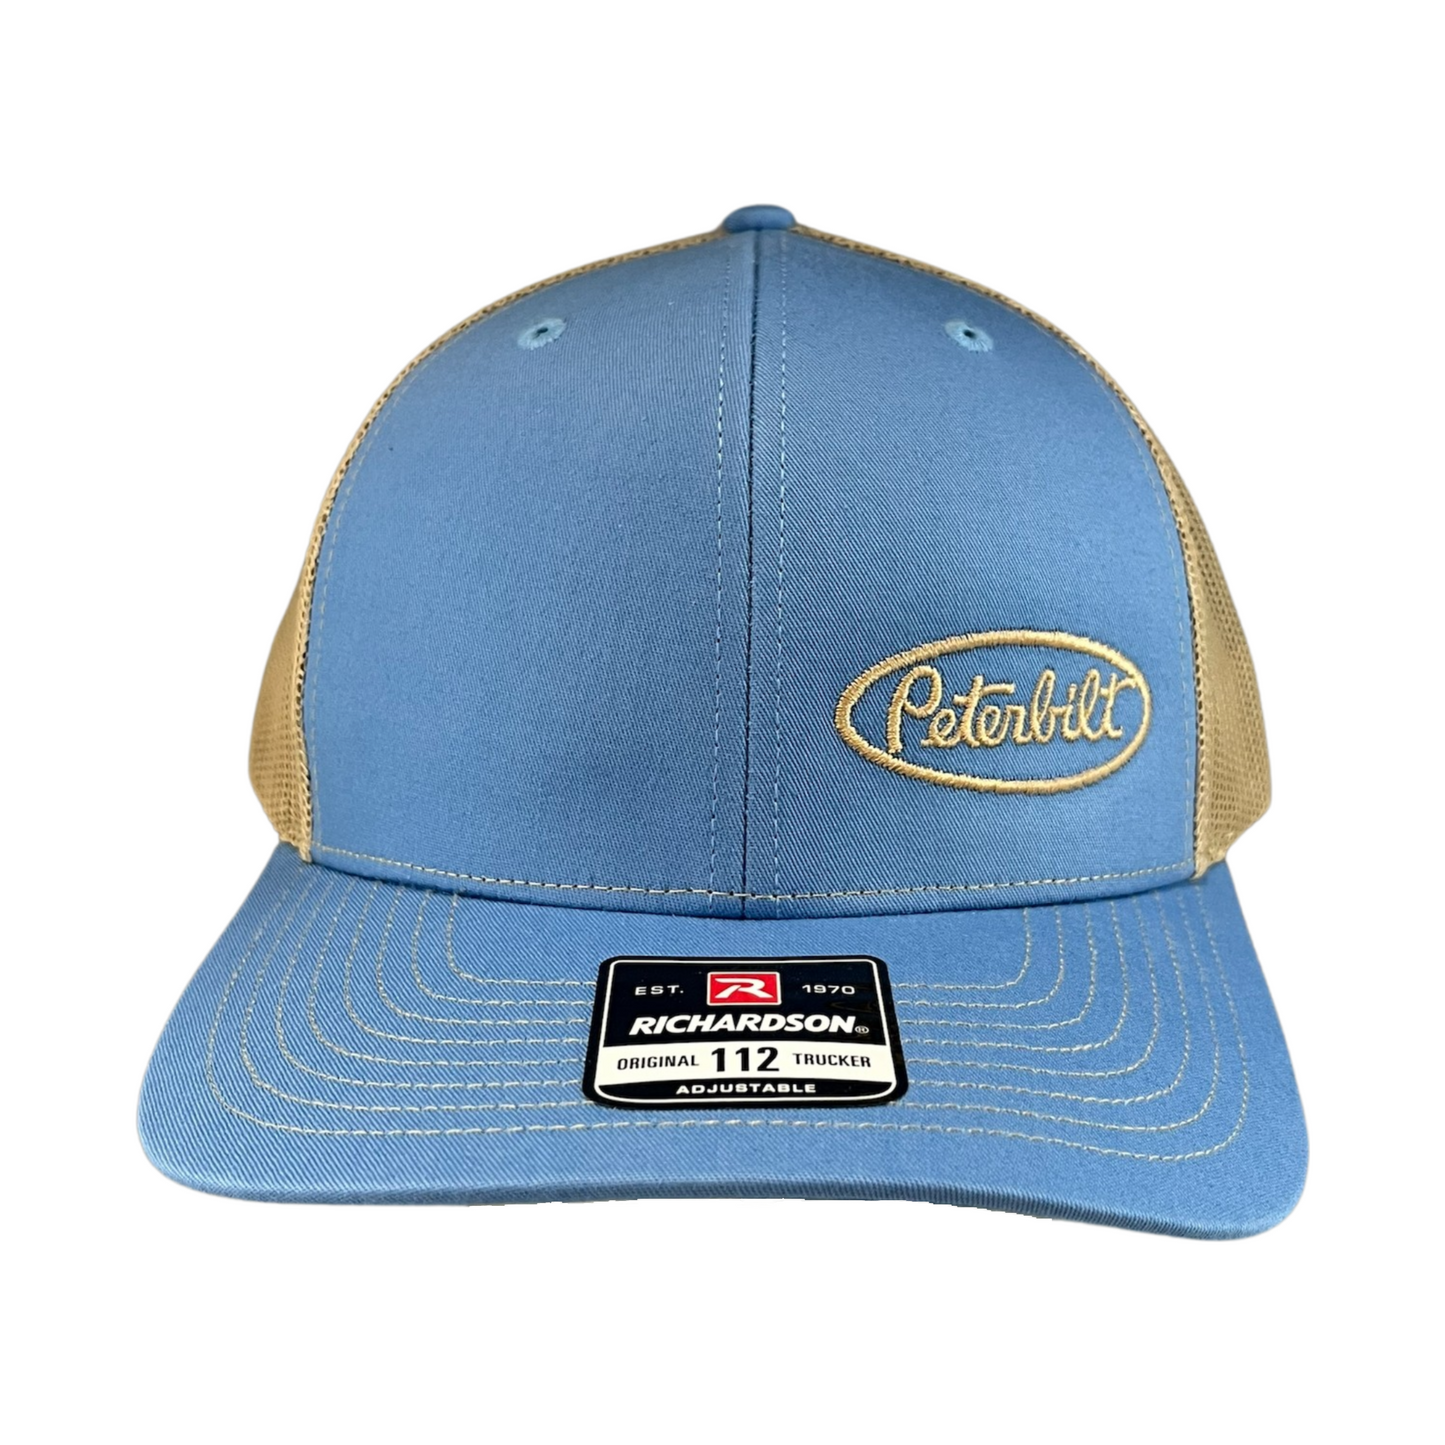 Classic Light Blue and Tan Peterbilt logo Trucker Cap